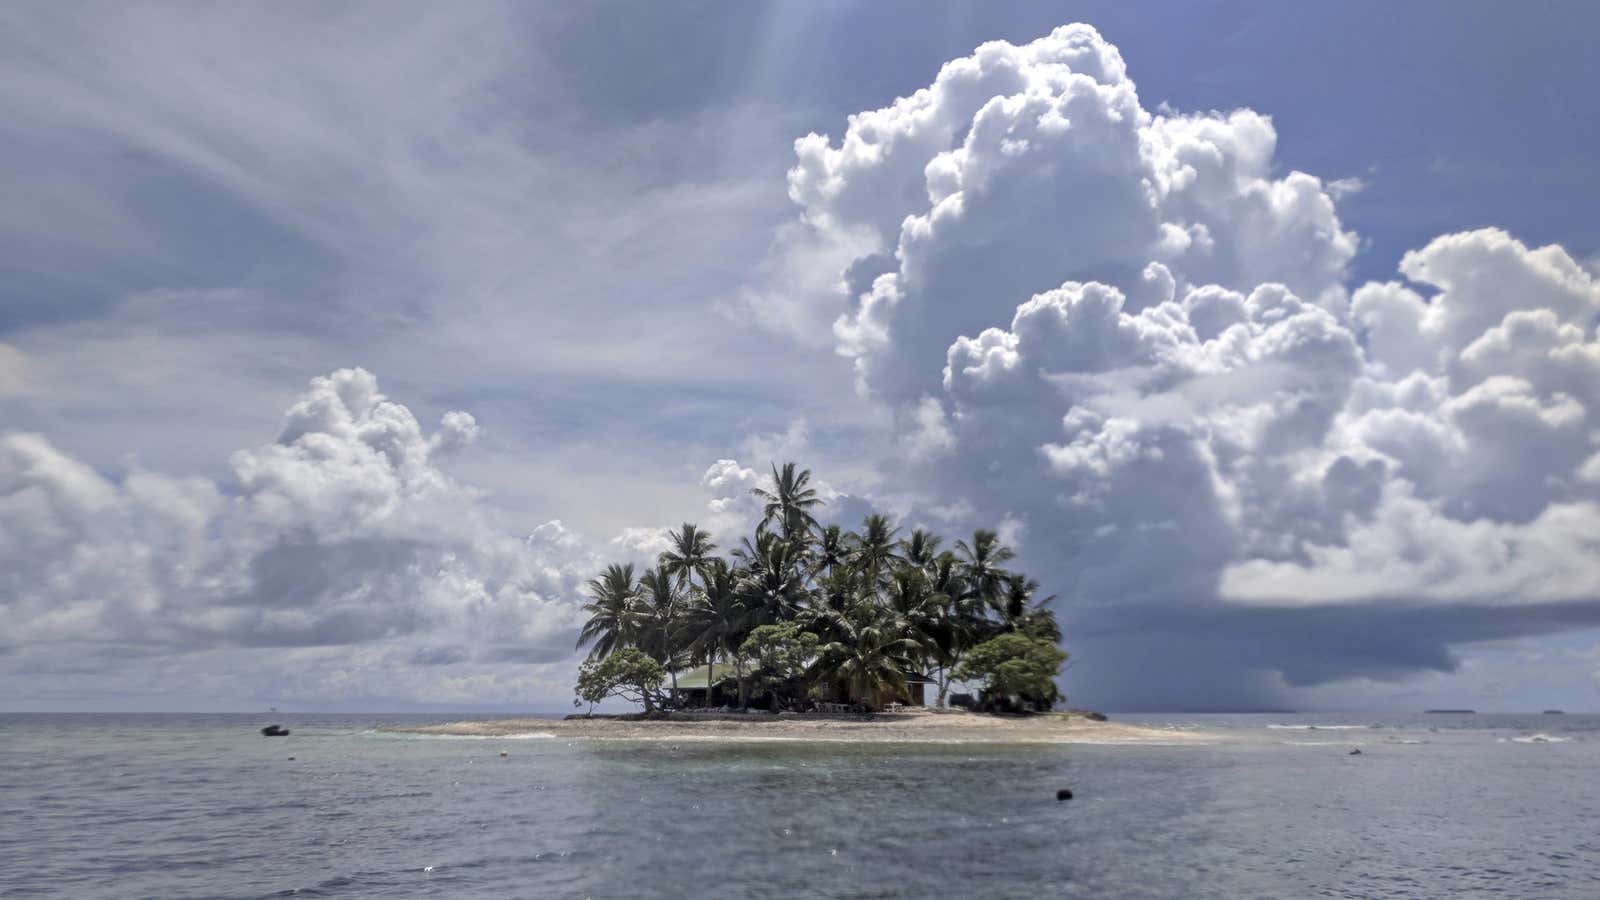 Anyone for a trip to Micronesia’s Jeep Island?